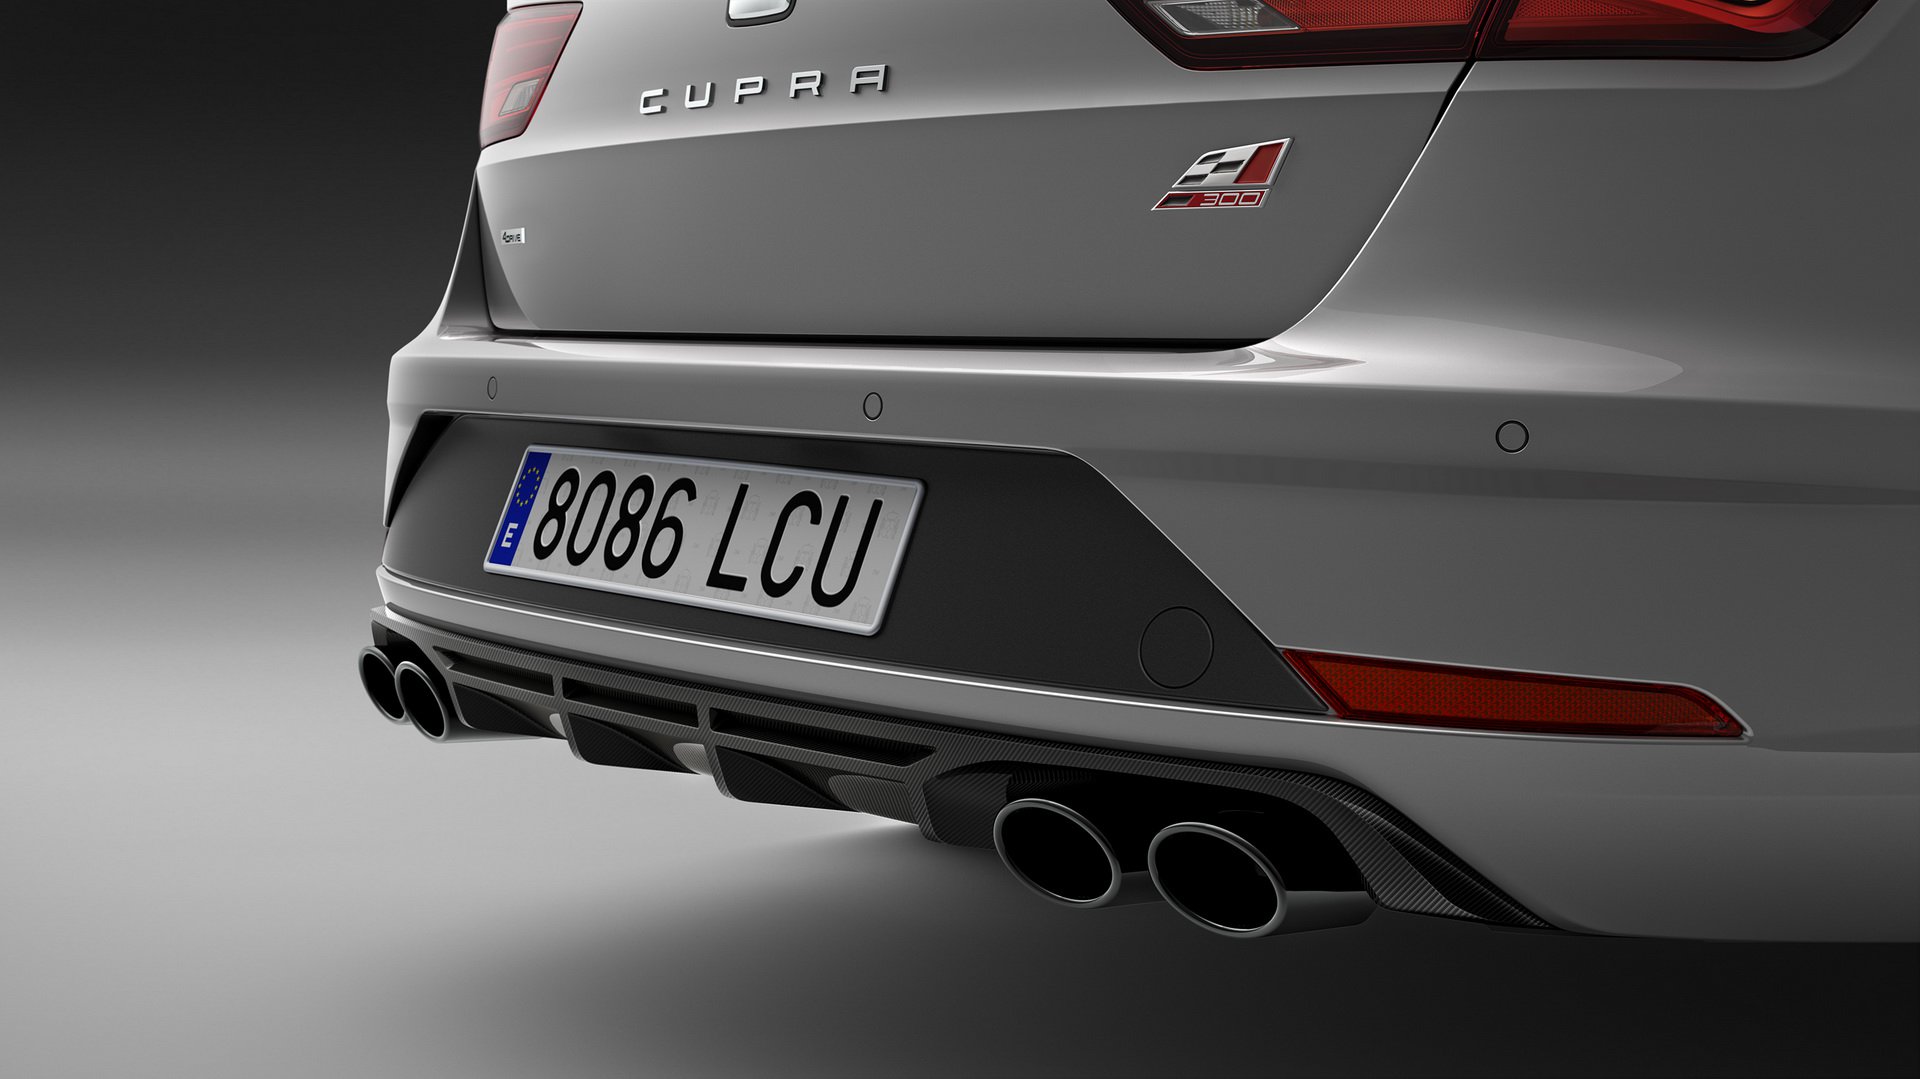 Seat Leon ST Cupra Carbon Edition